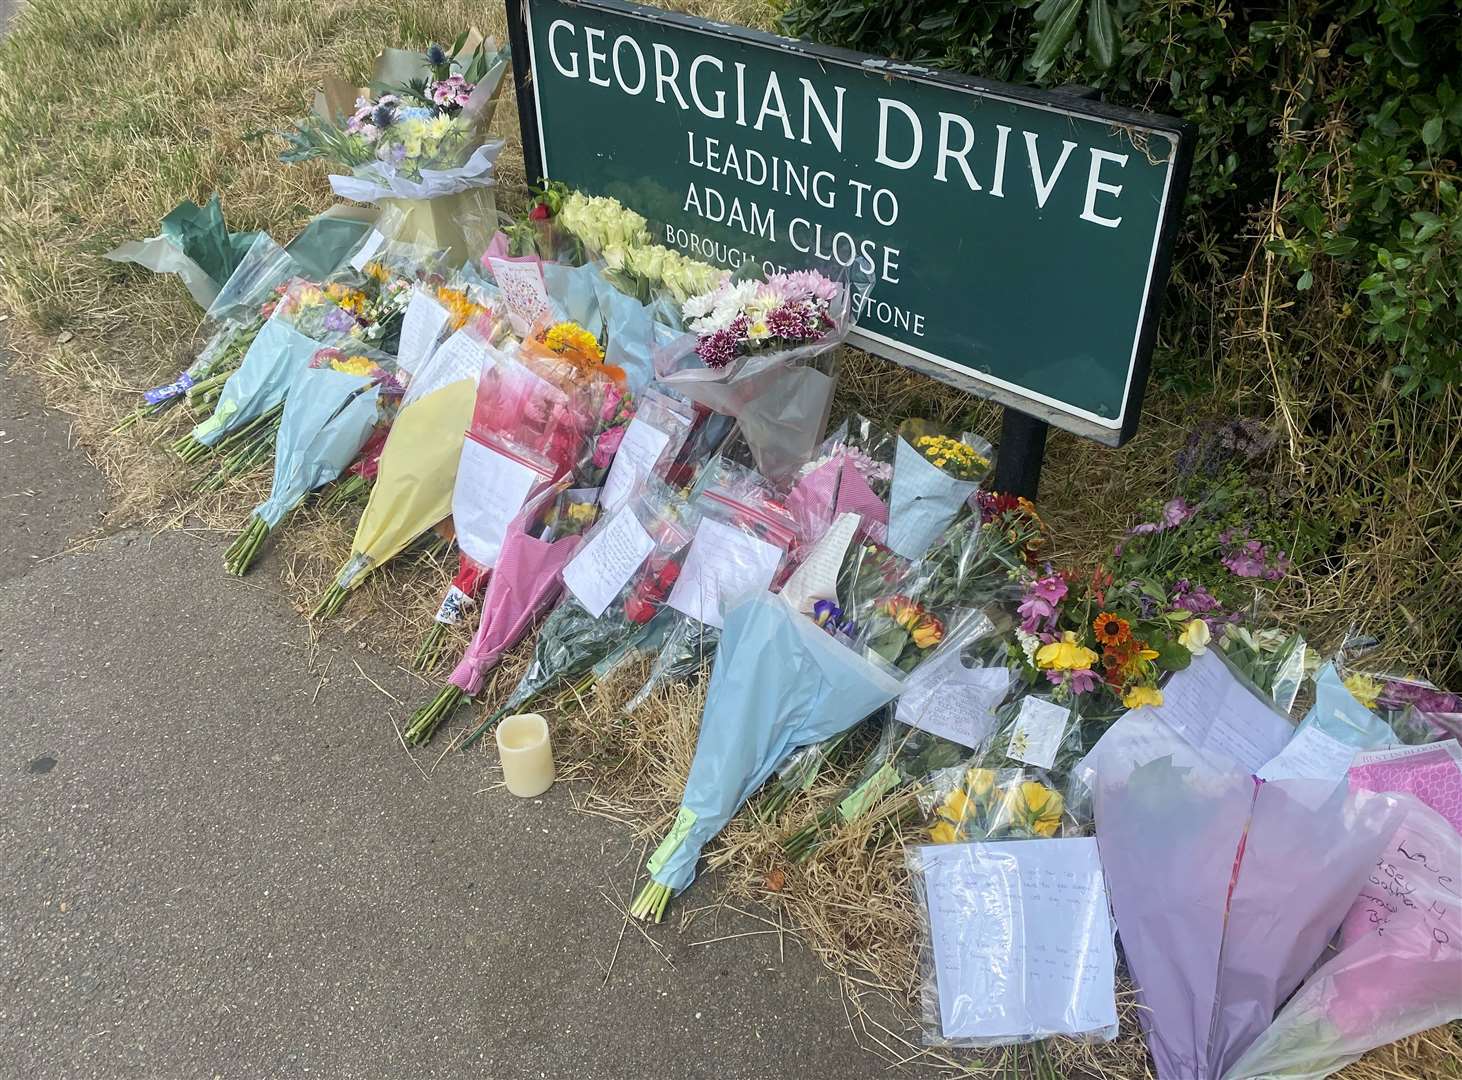 Floral tributes were left at the scene of a fatal crash in Coxheath. Picture: Ben Austin